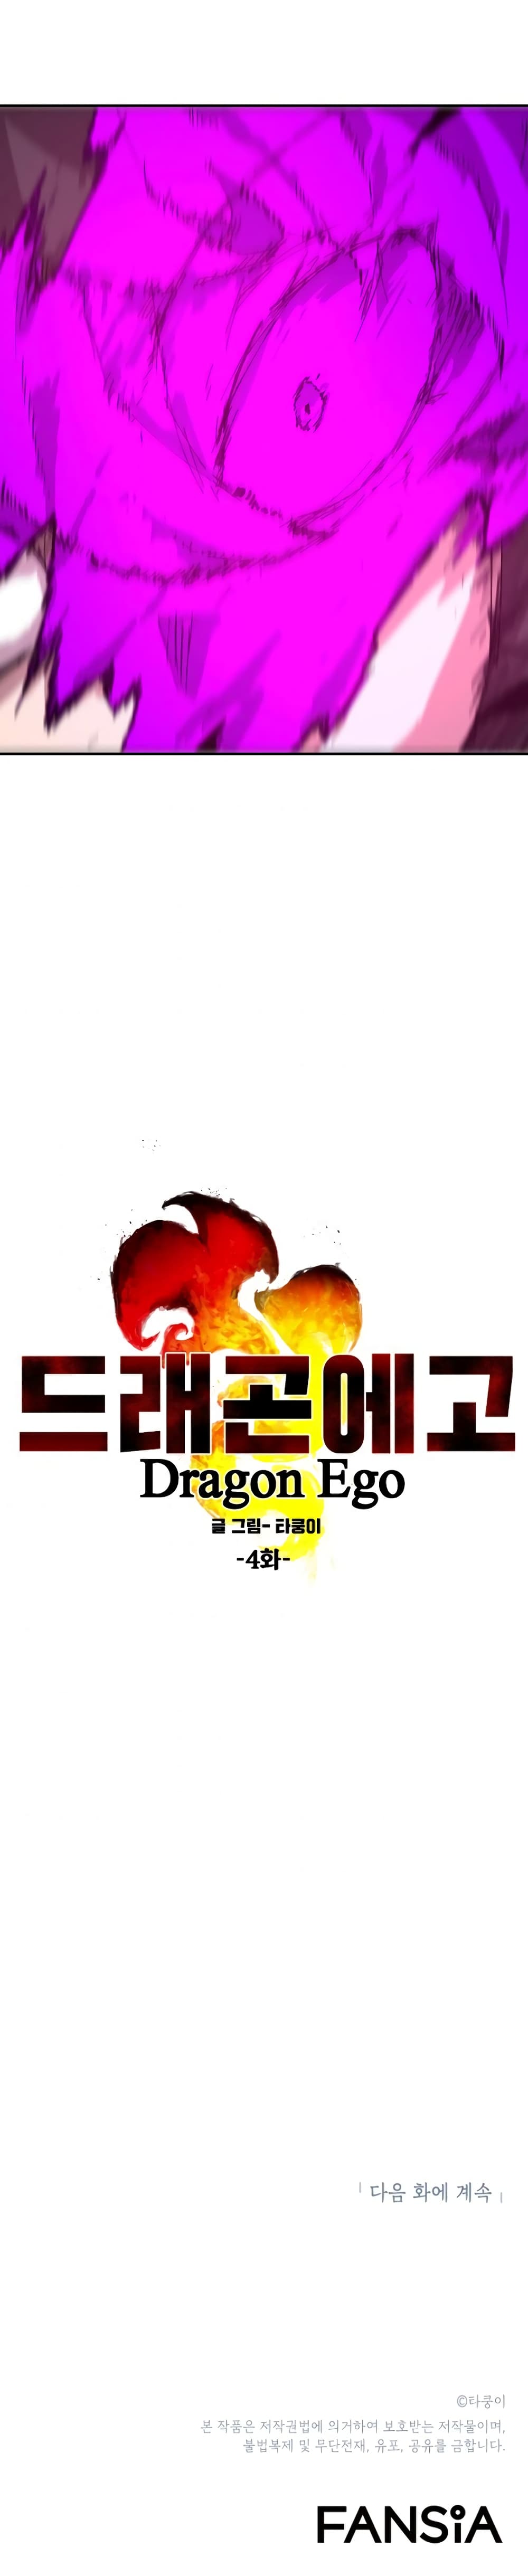 Dragon Ego ตอนที่ 4 (26)